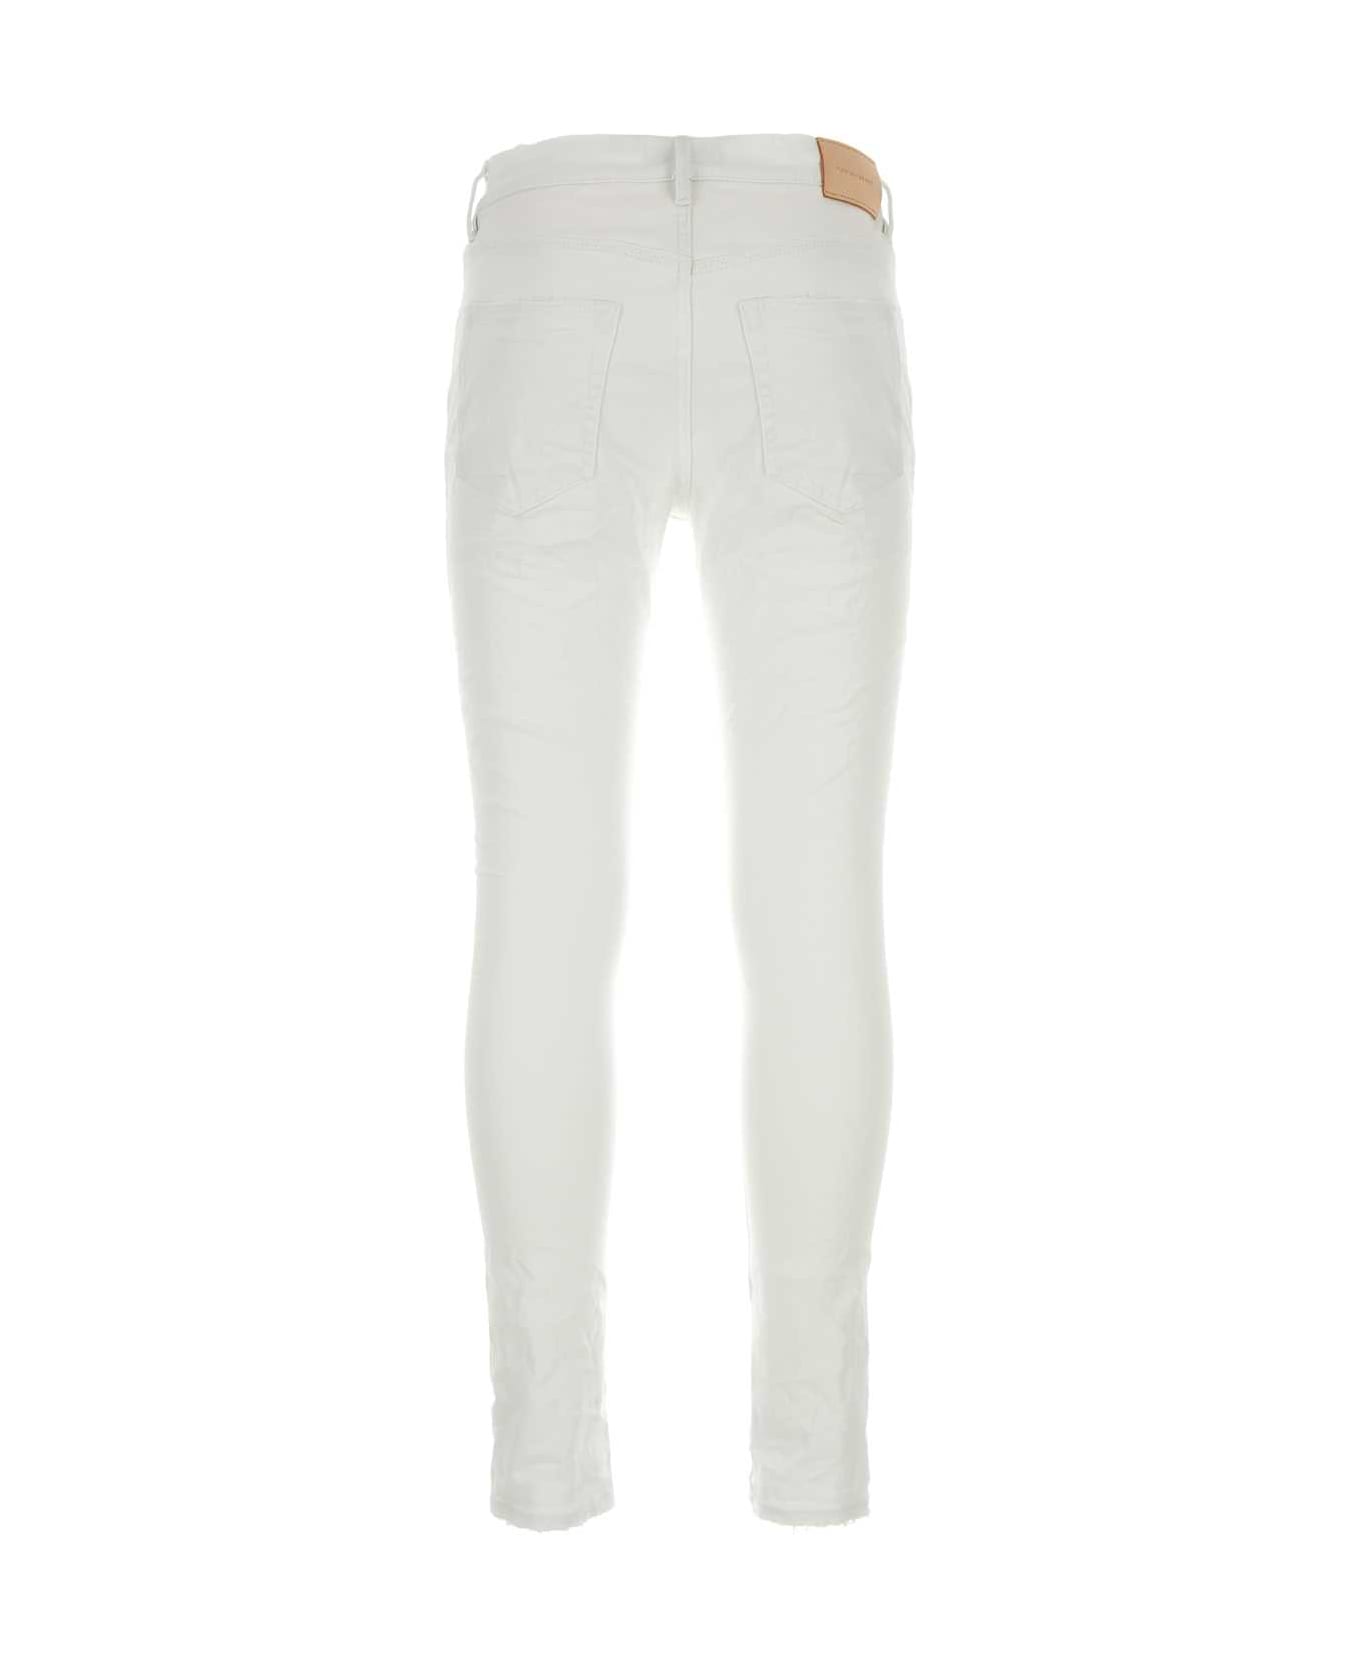 Purple Brand White Stretch Denim Jeans - OPTICWHITE ボトムス